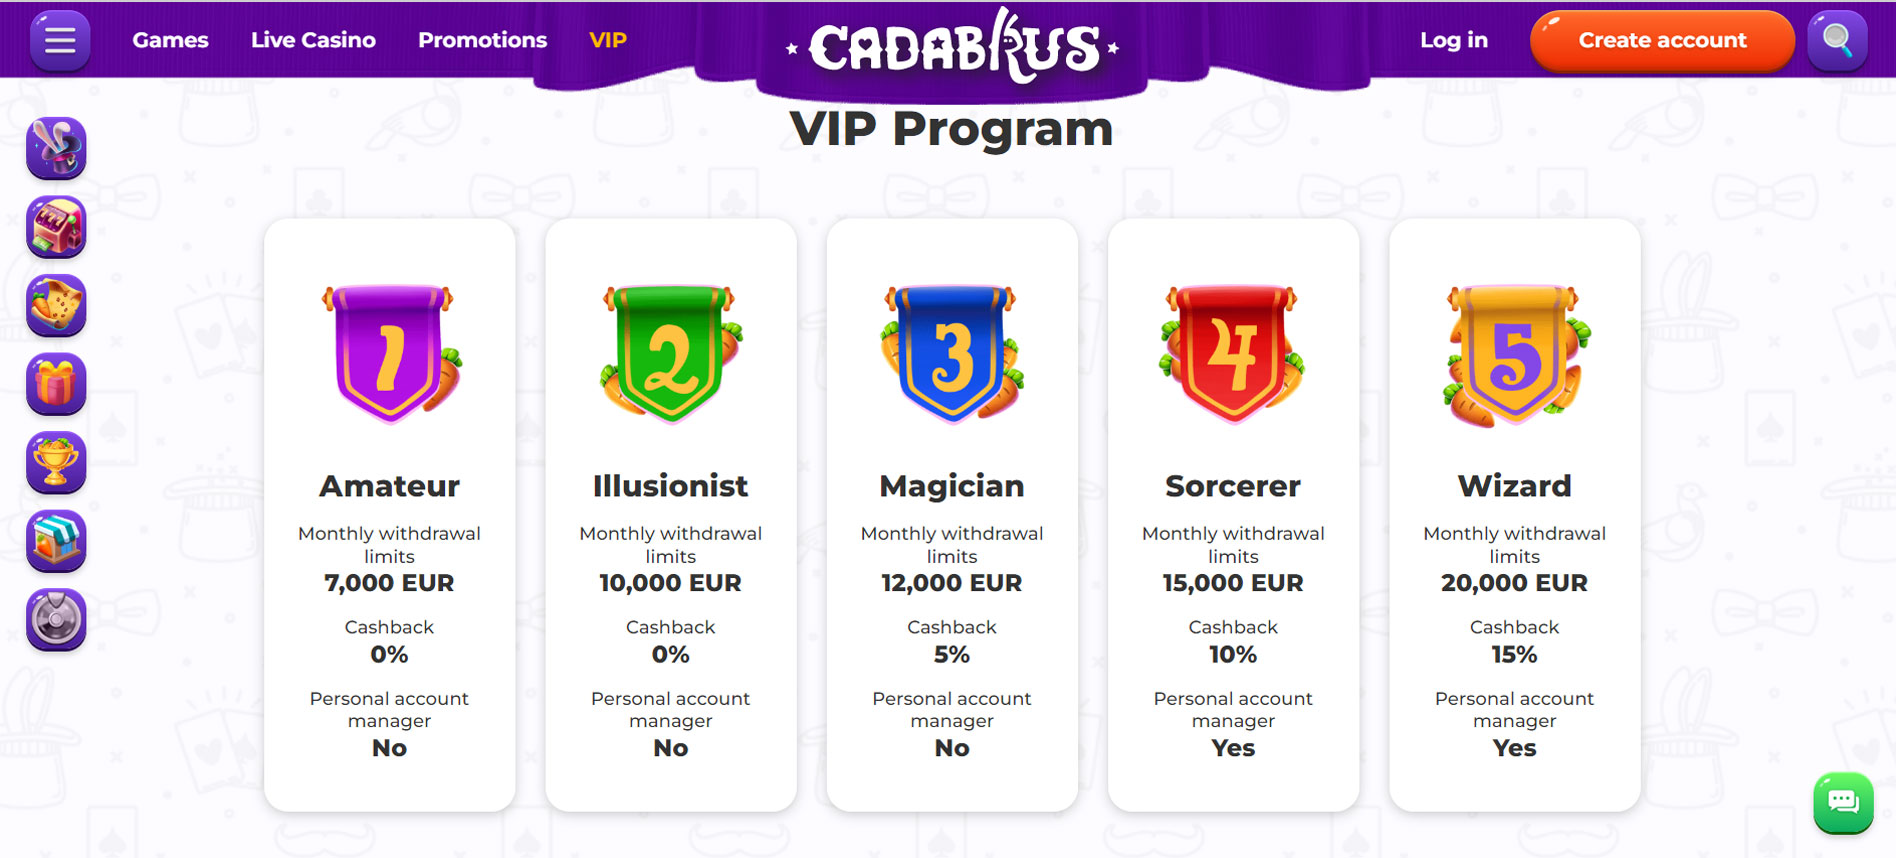 Cadabrus Casino VIP Program